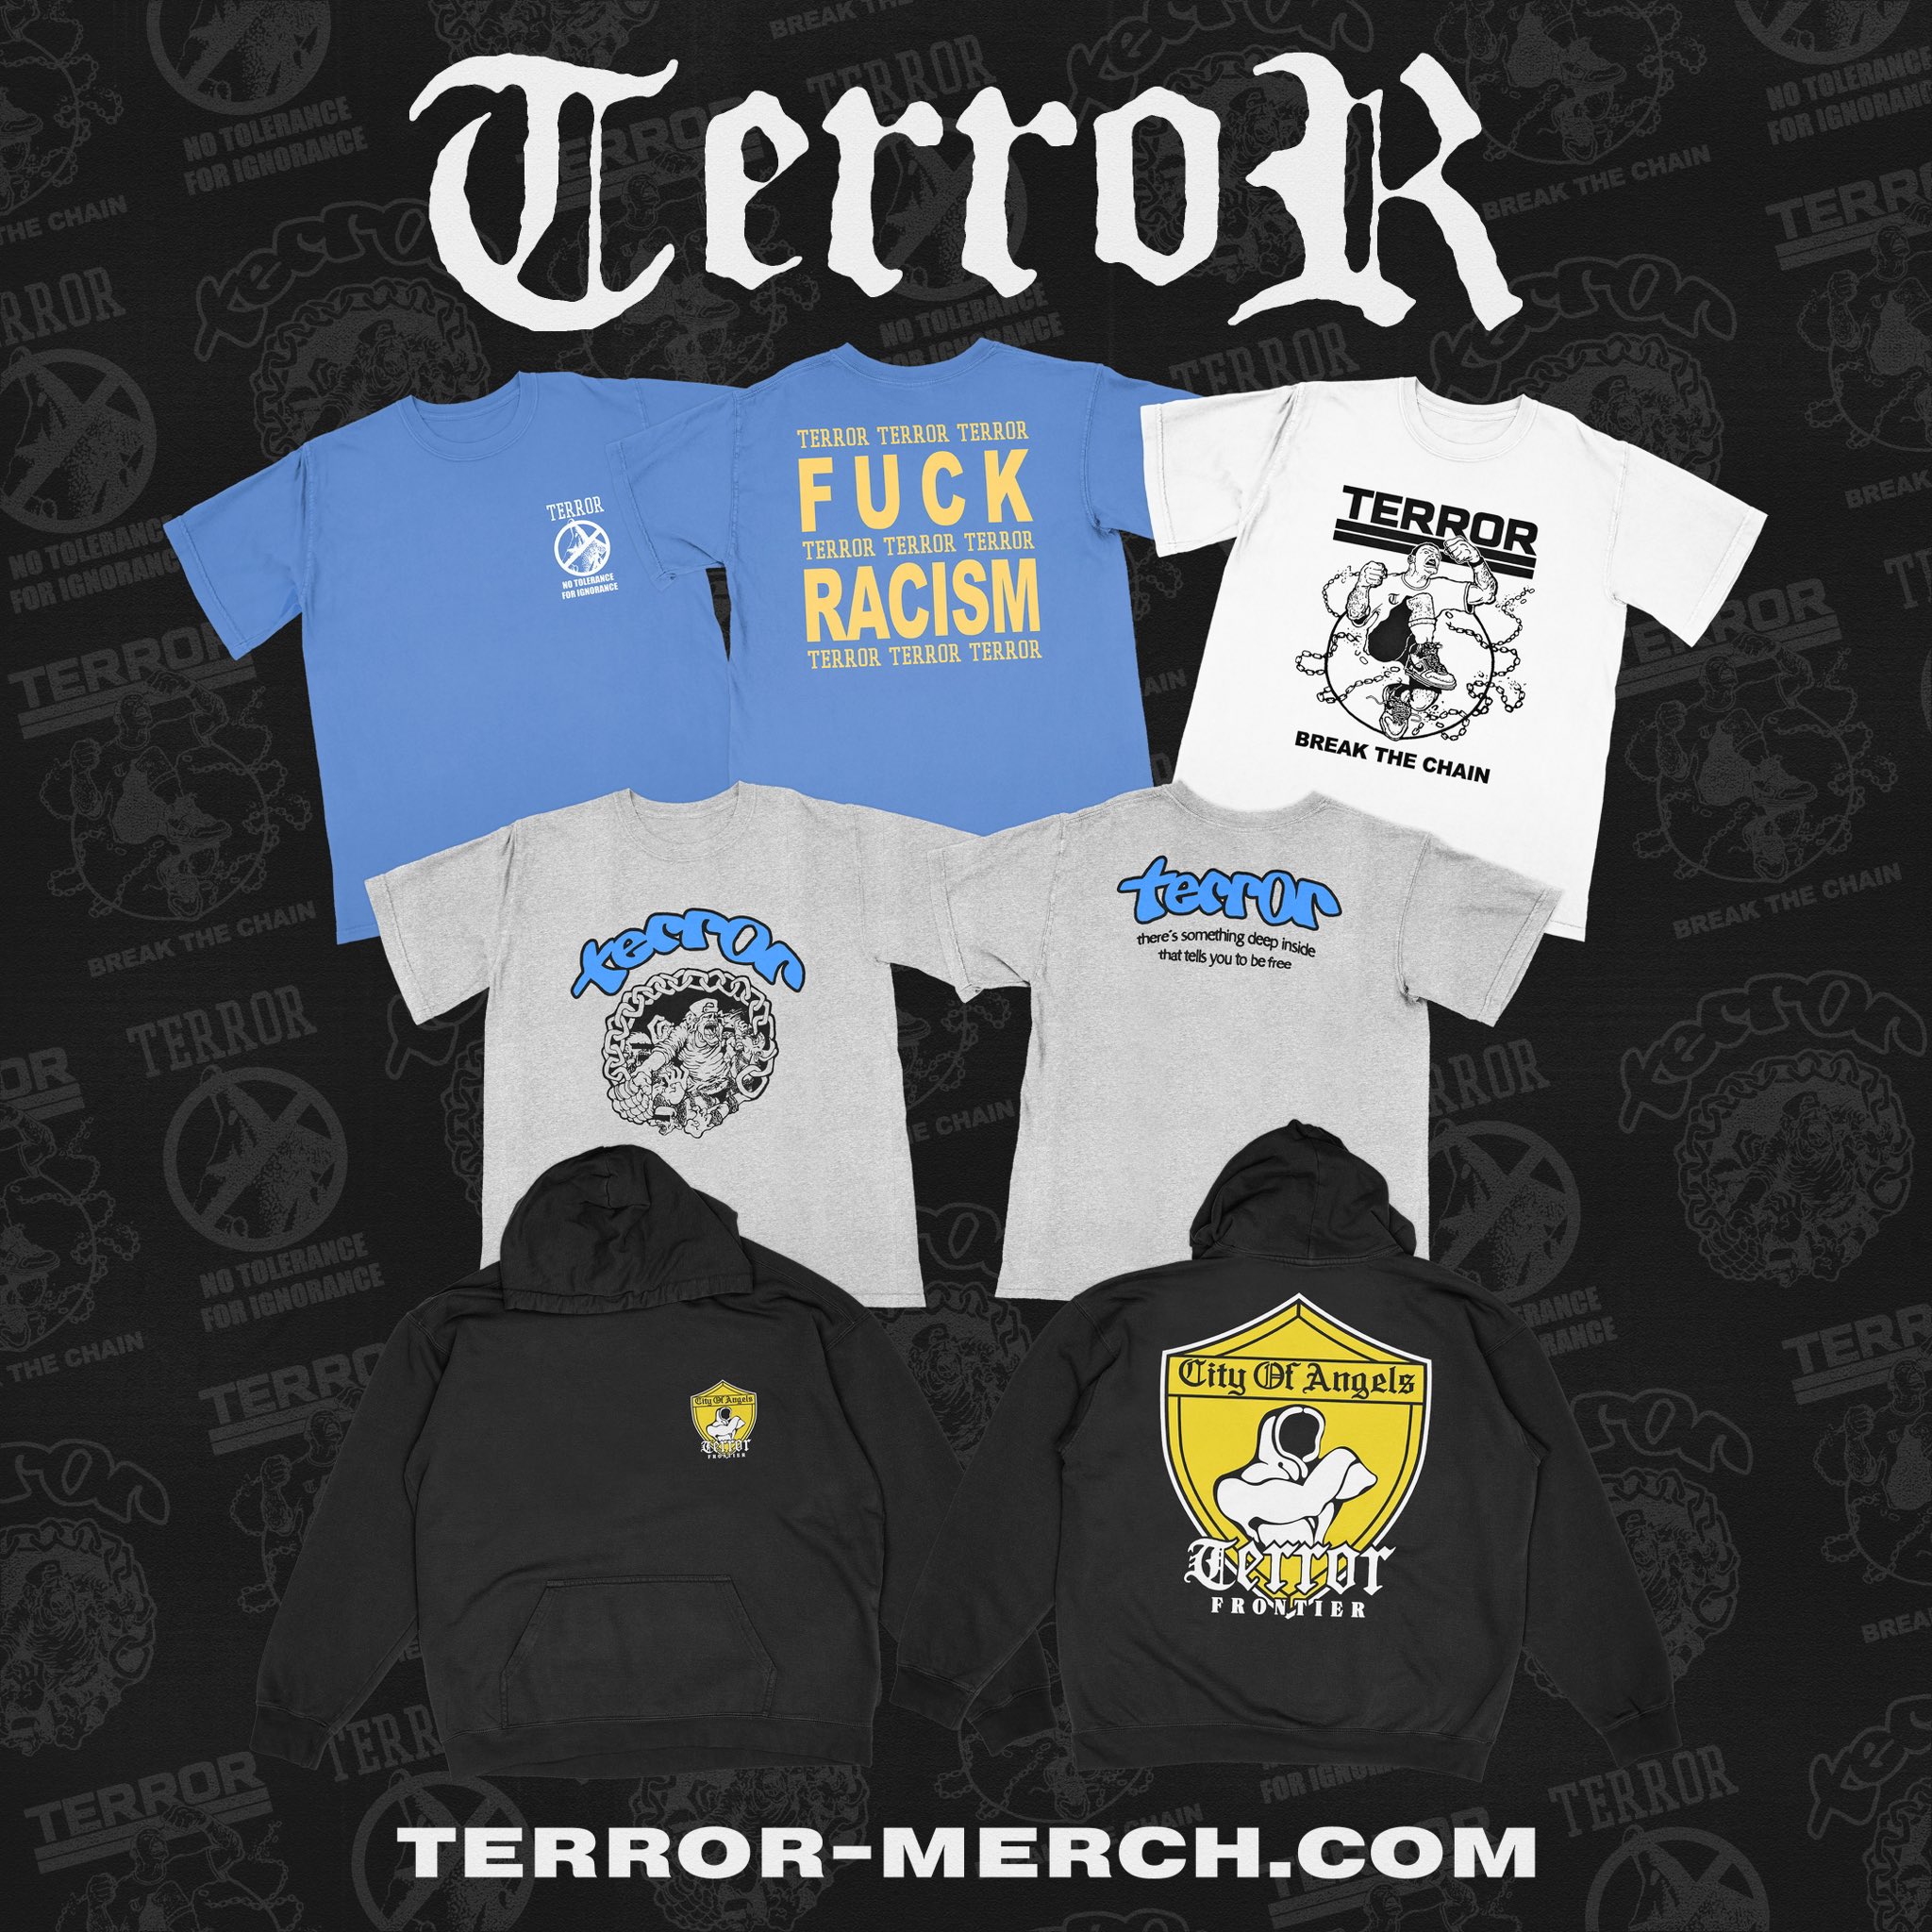 Terror NET (@TerrorNETGG) / X